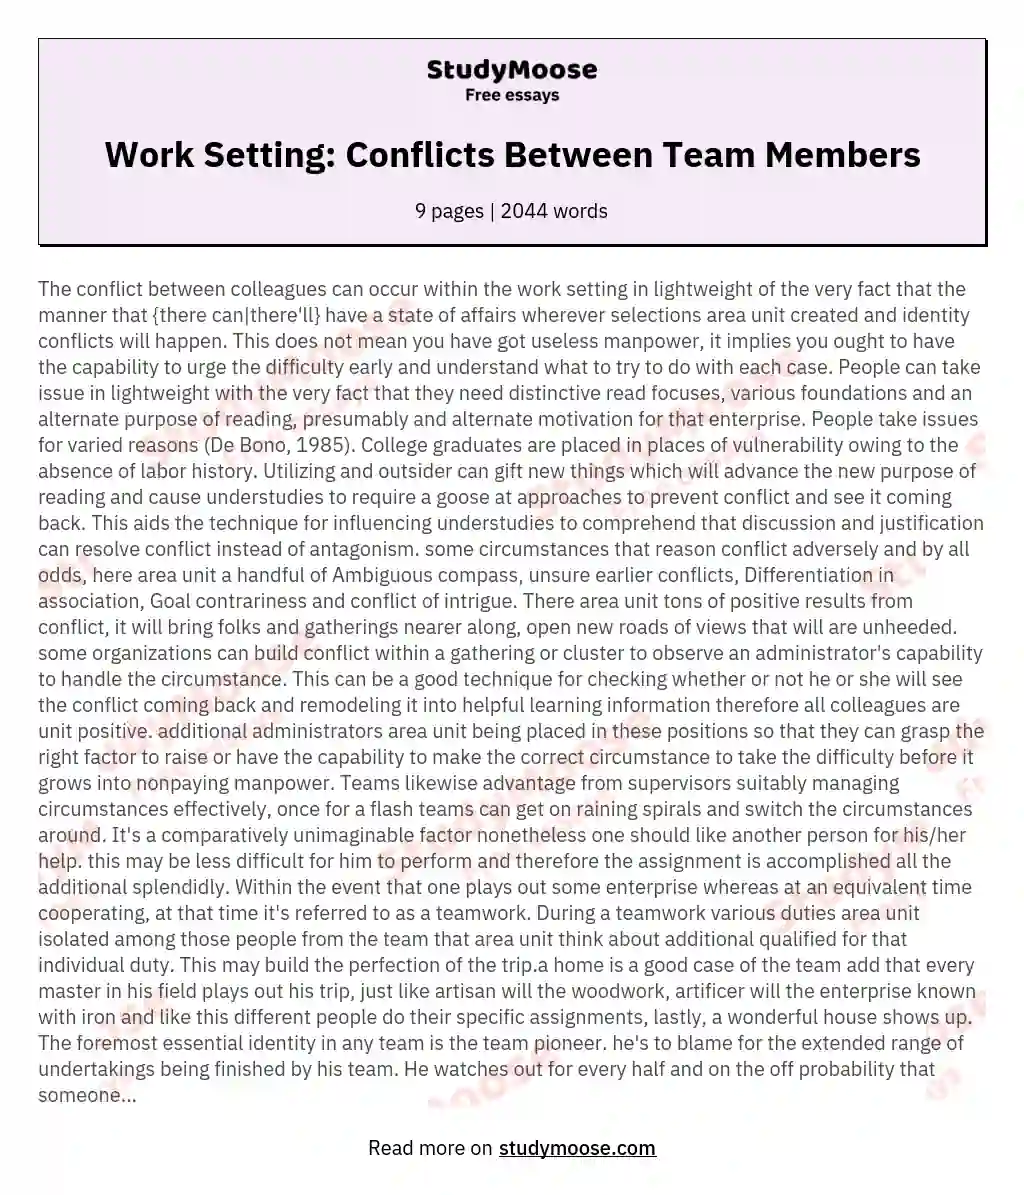 Work Setting: Conflicts Between Team Members essay